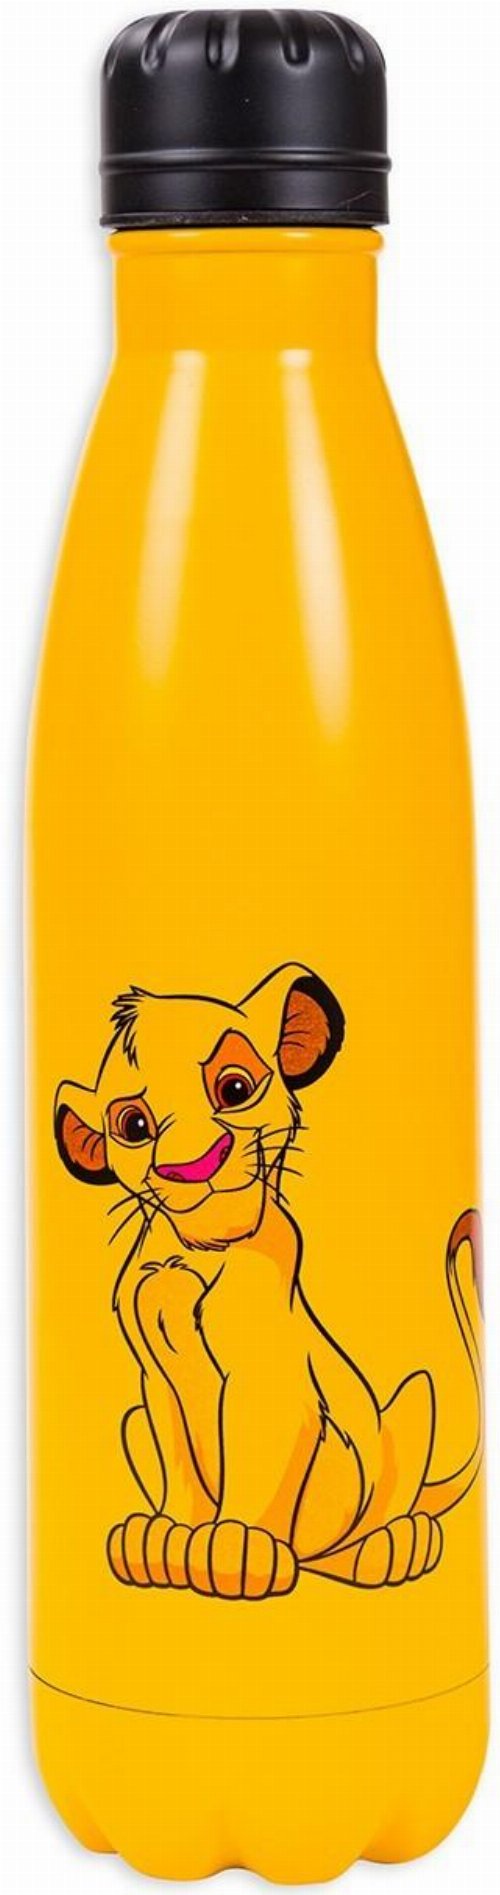 Disney - The Lion King Simba Μπουκάλι Νερού
(540ml)